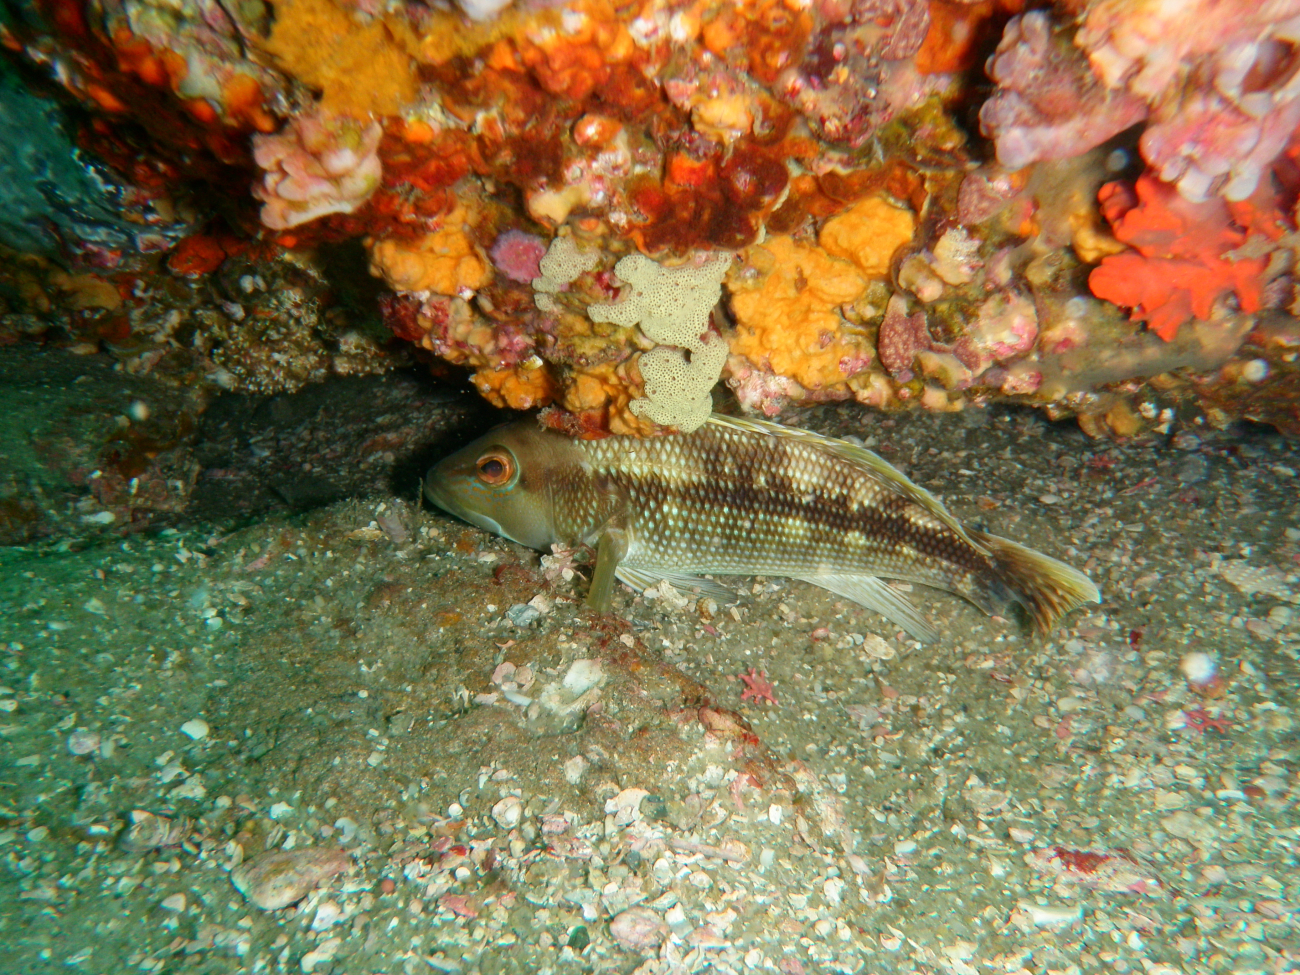 Black sea bass hiding under a ledge